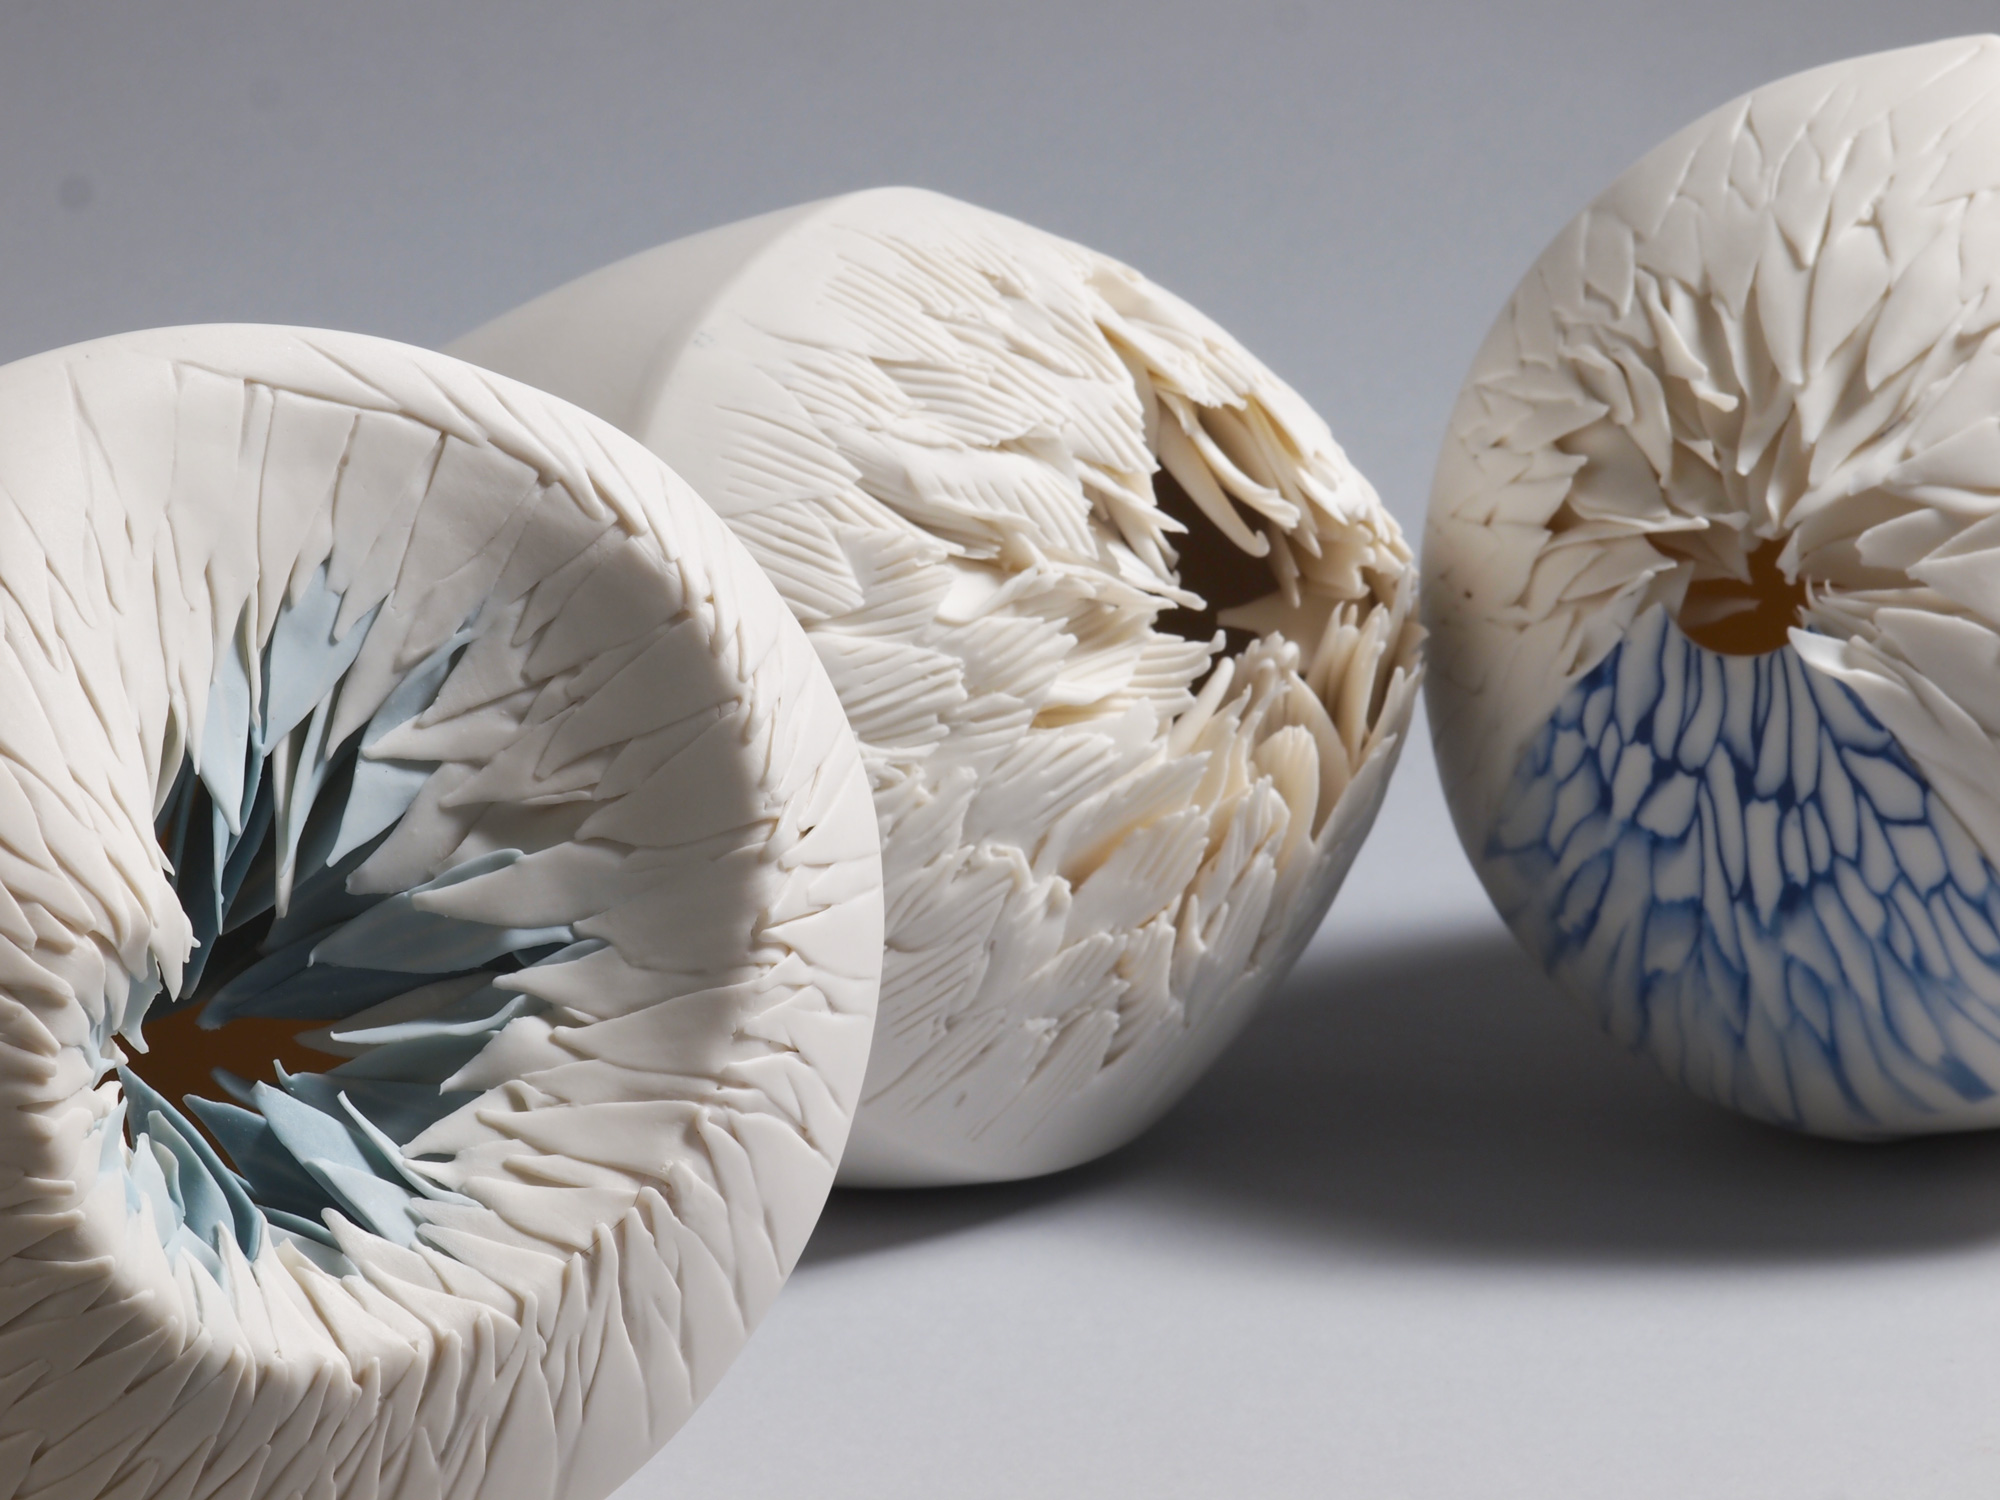 Sharp-Edged Porcelain Vessels by Martha Pachón Rodríguez